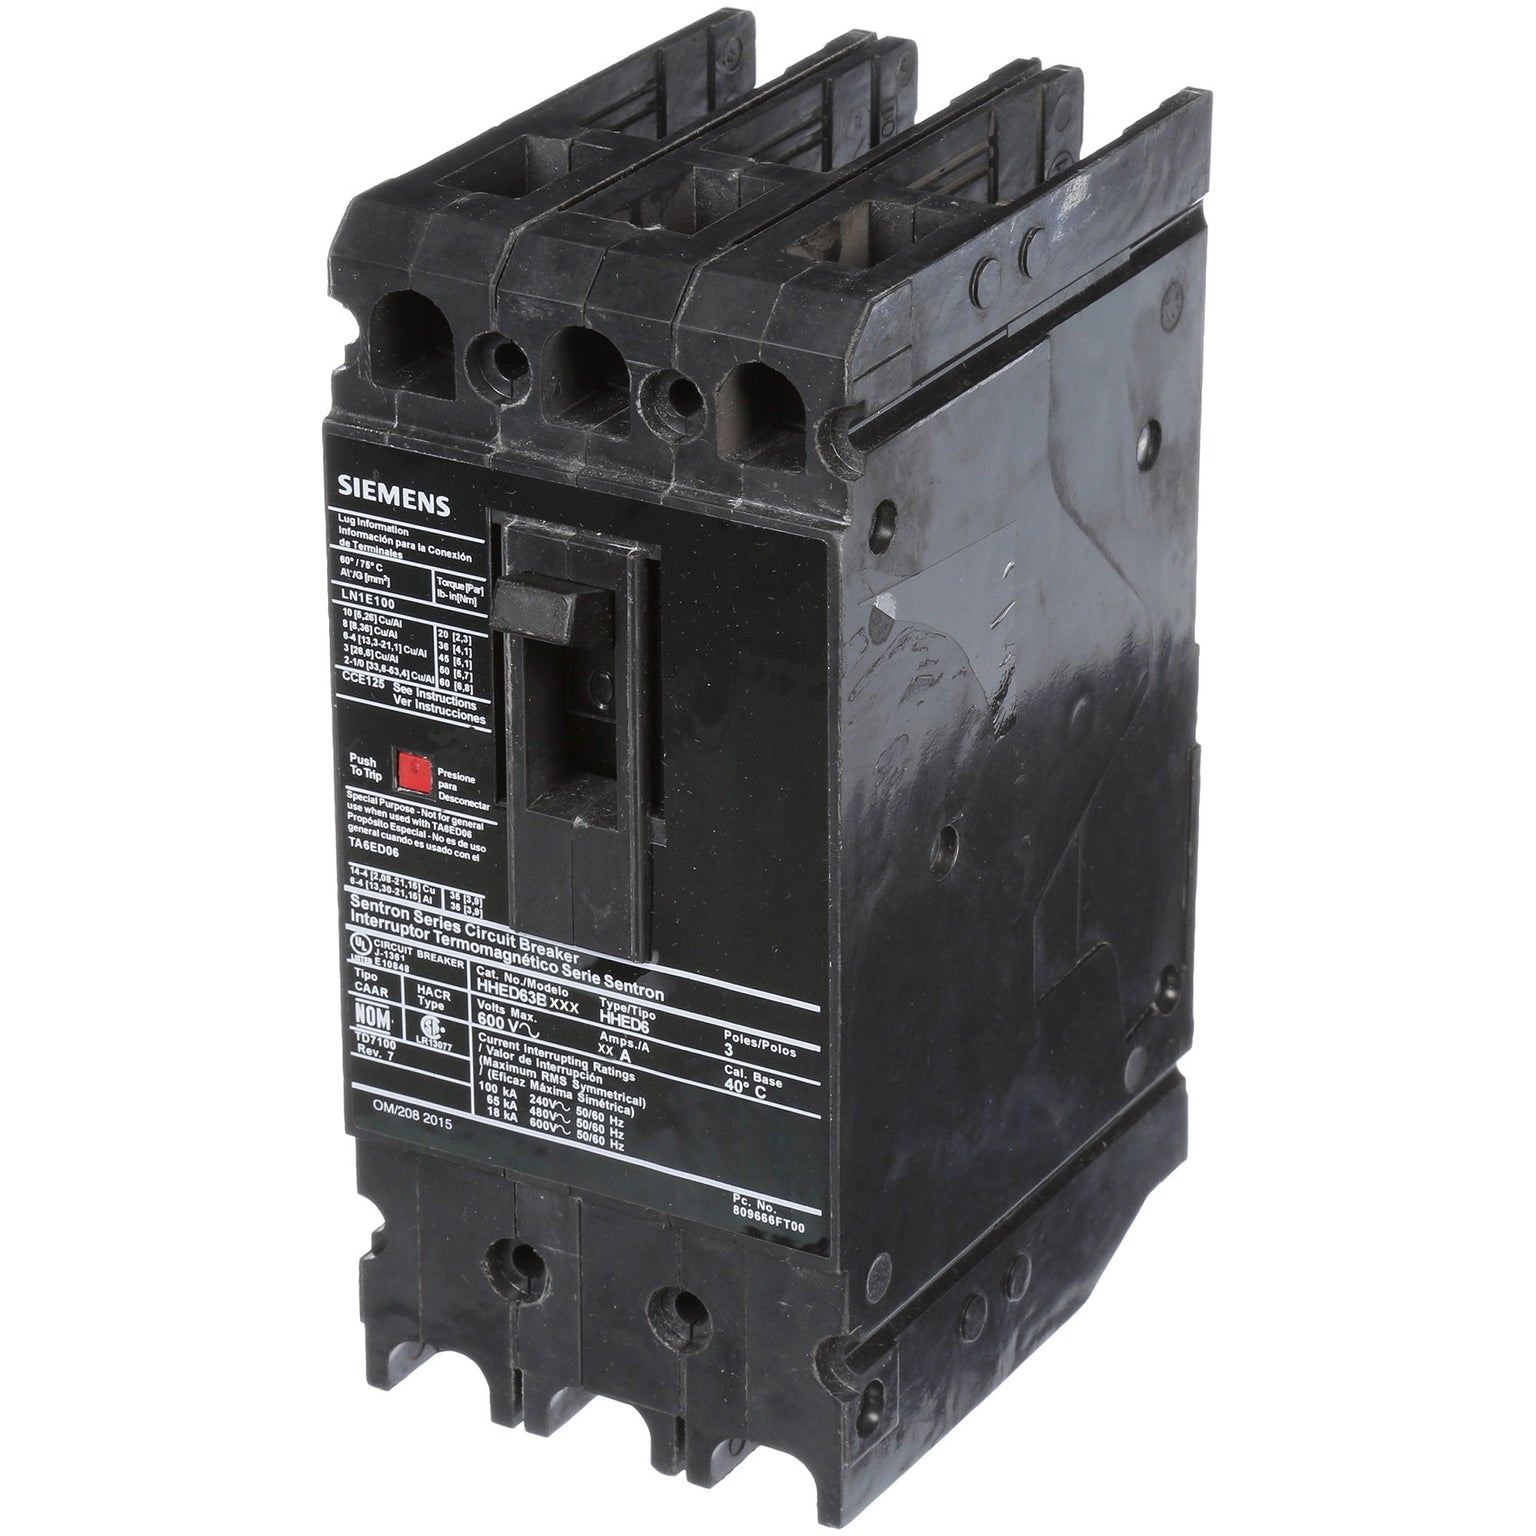 HHED63B035L - Siemens - 35 Amp Molded Case Circuit Breaker